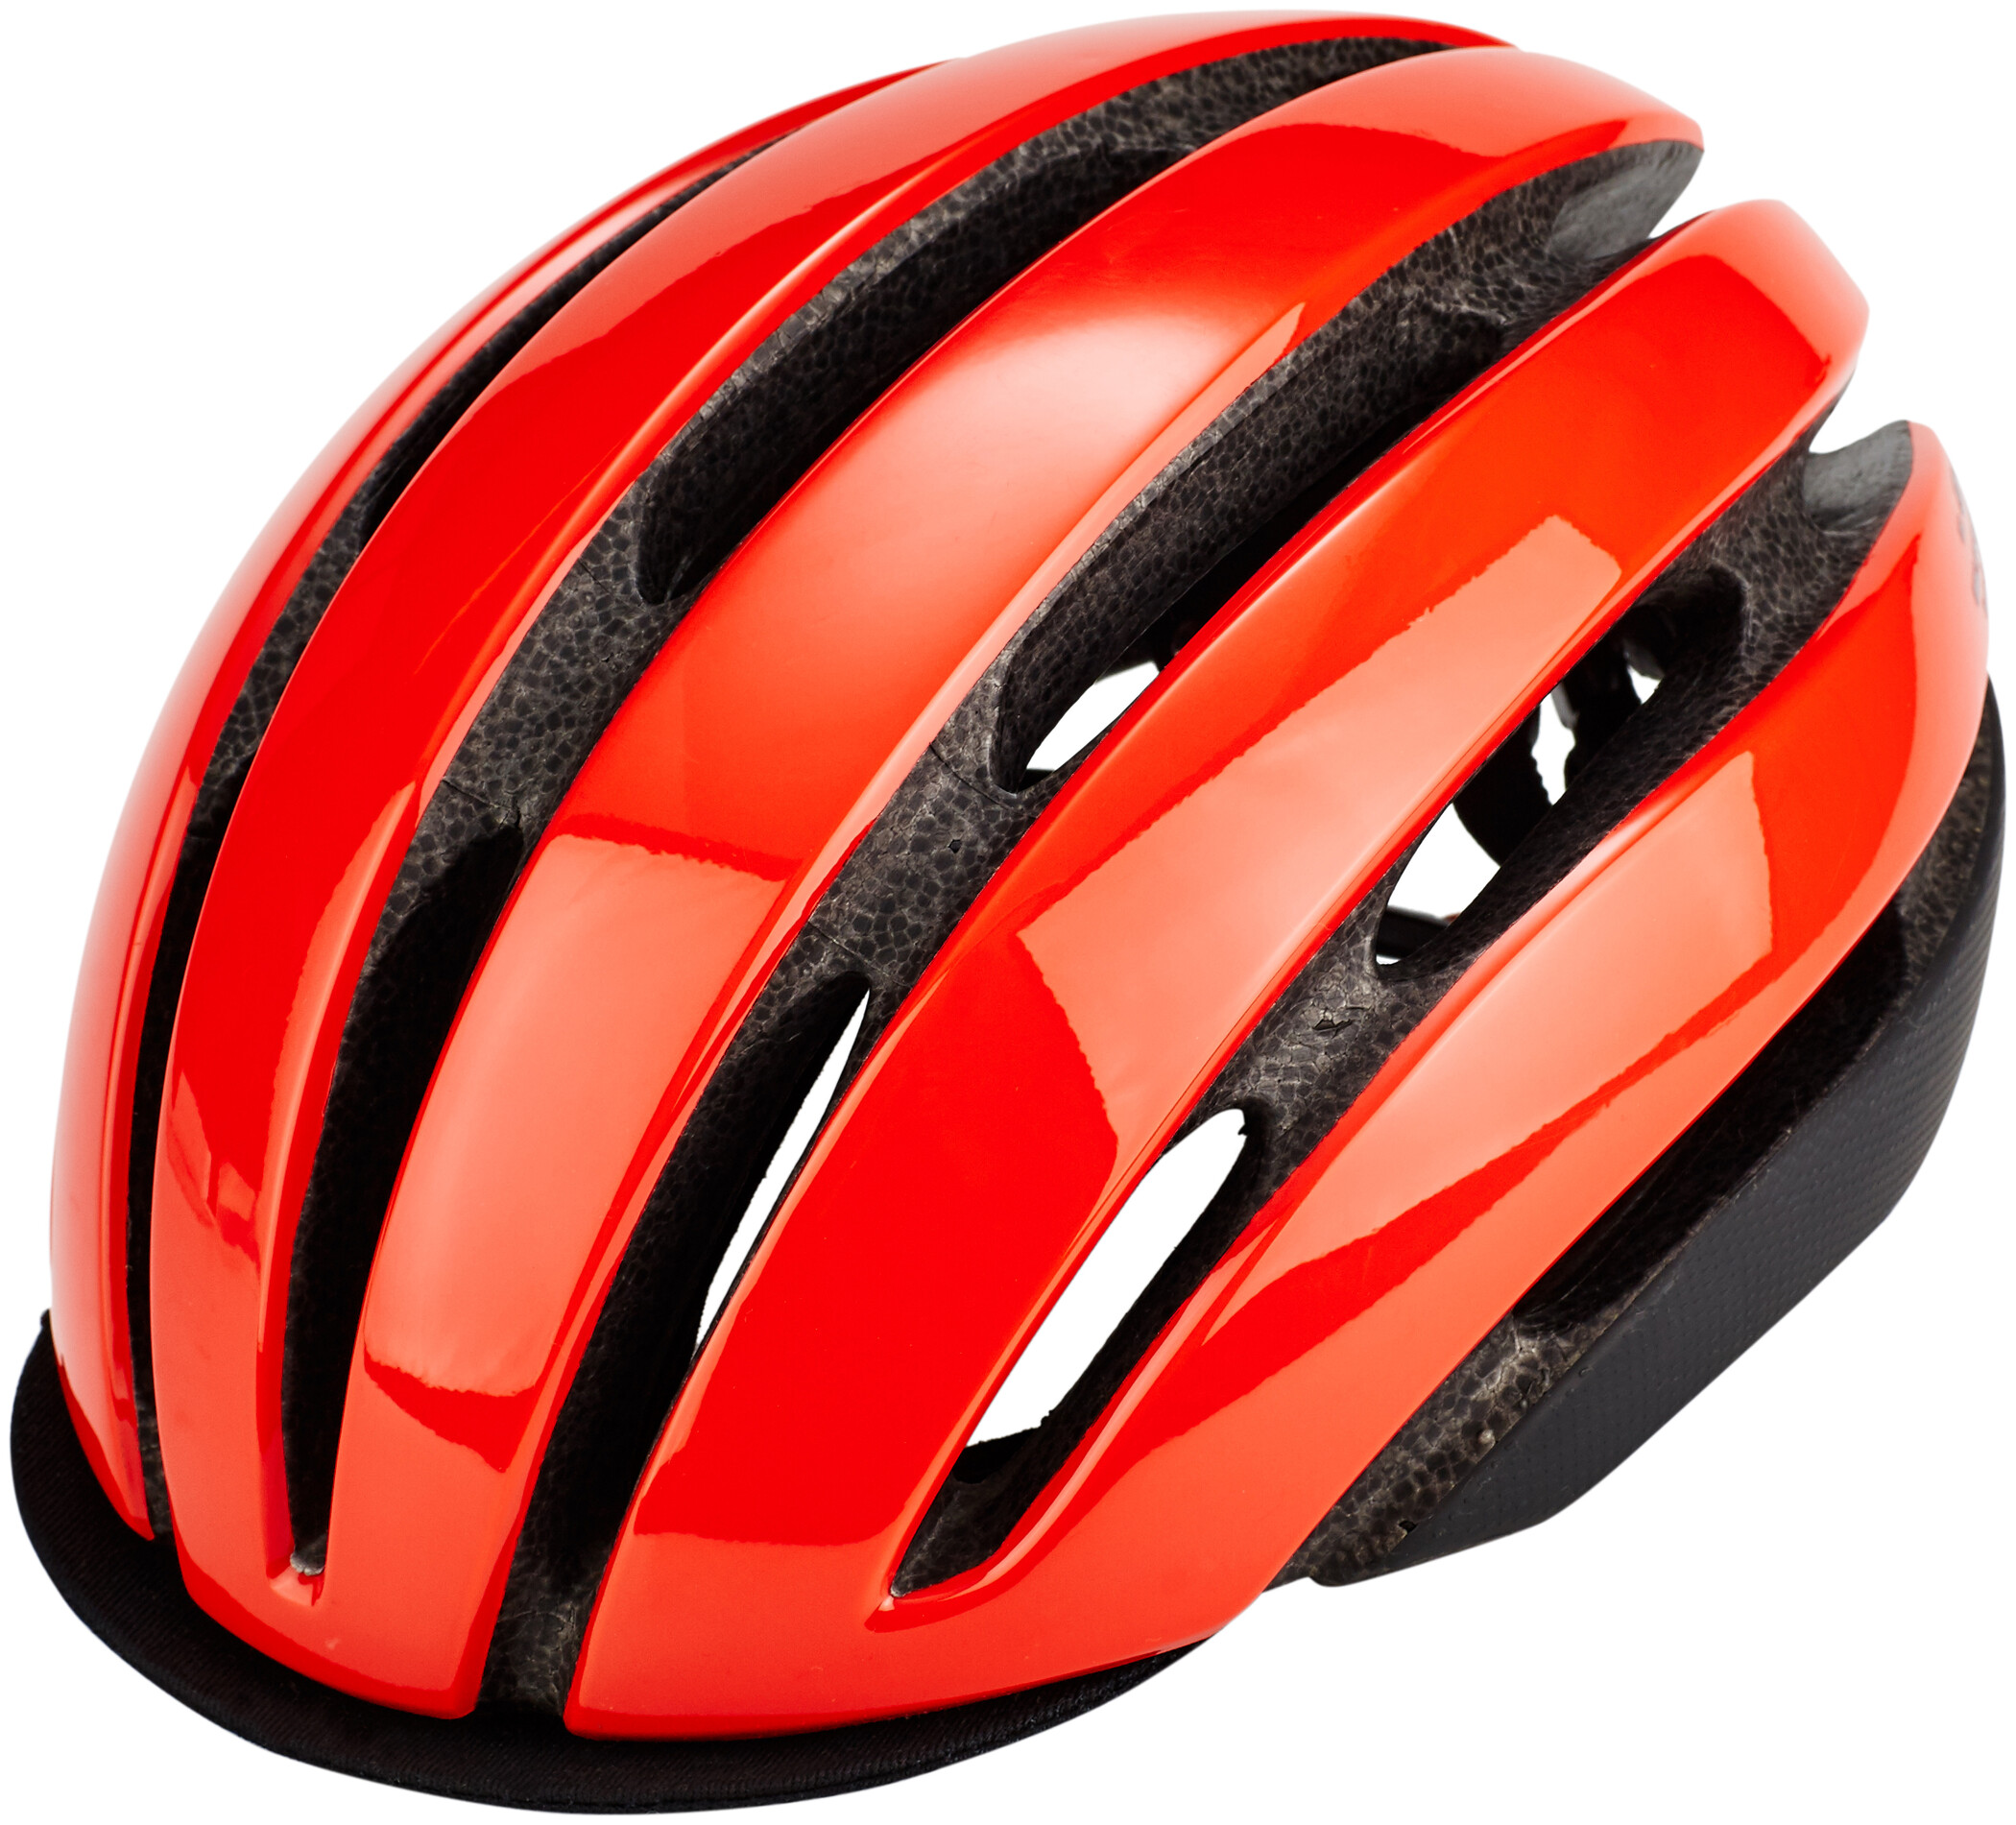 Giro Aspect Helmet | バイク・自転車通販のProbikeshop